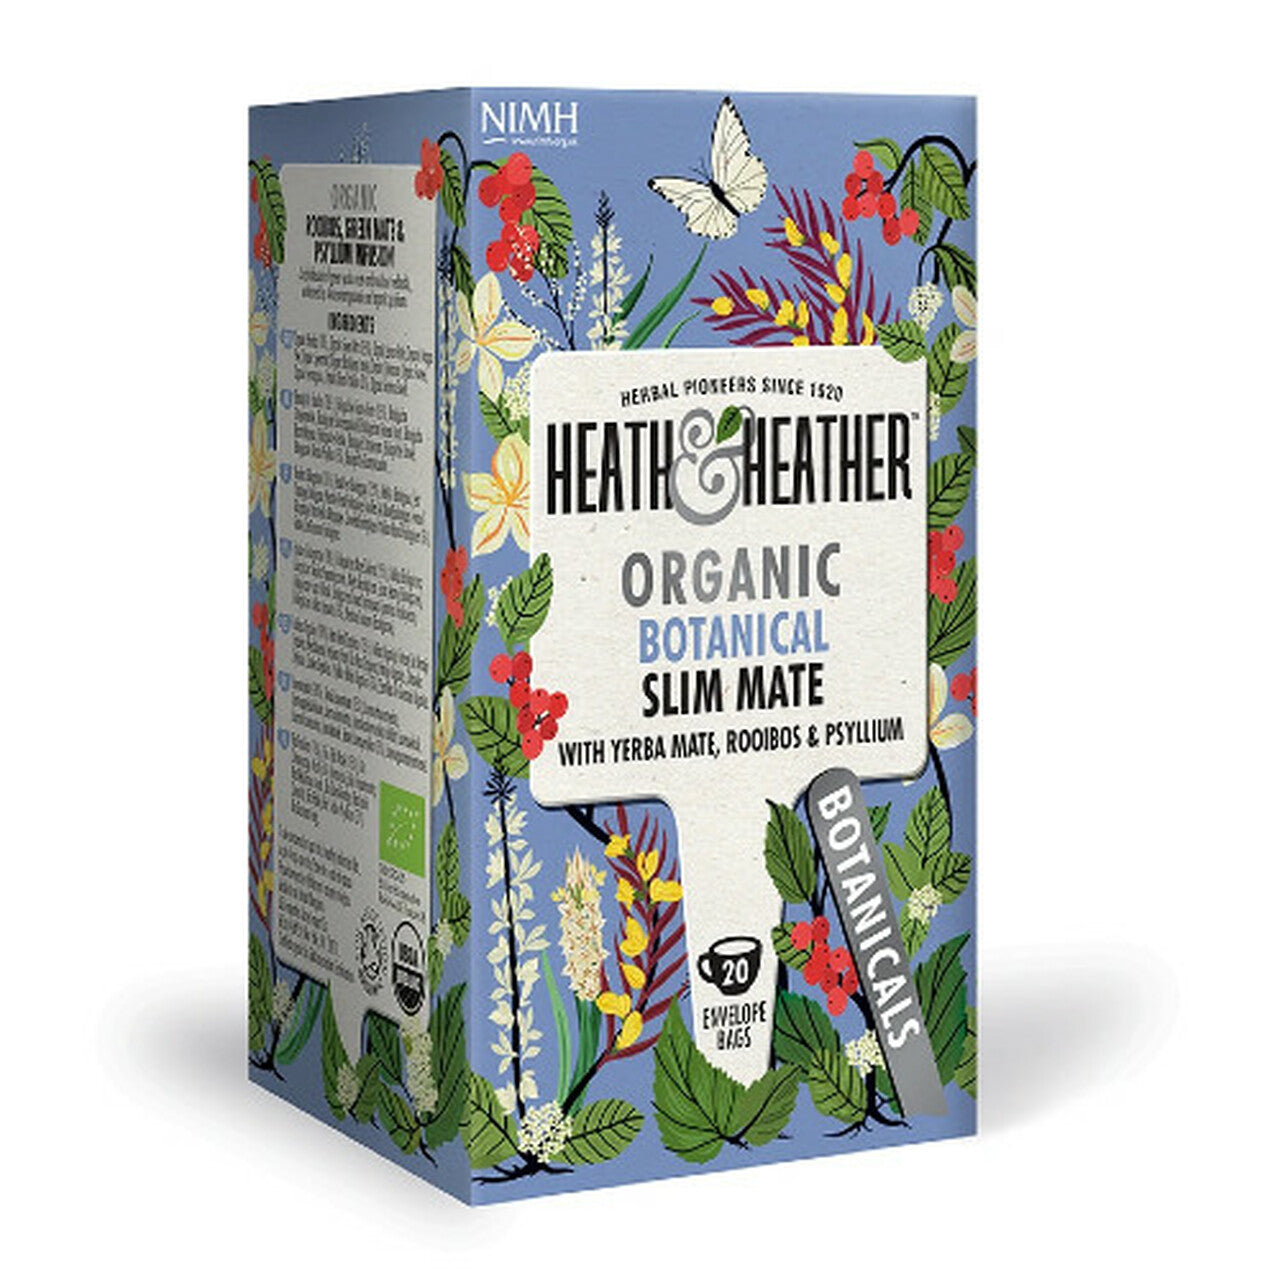 ✅ Heath & Heather Organic Botanical Slim Mate